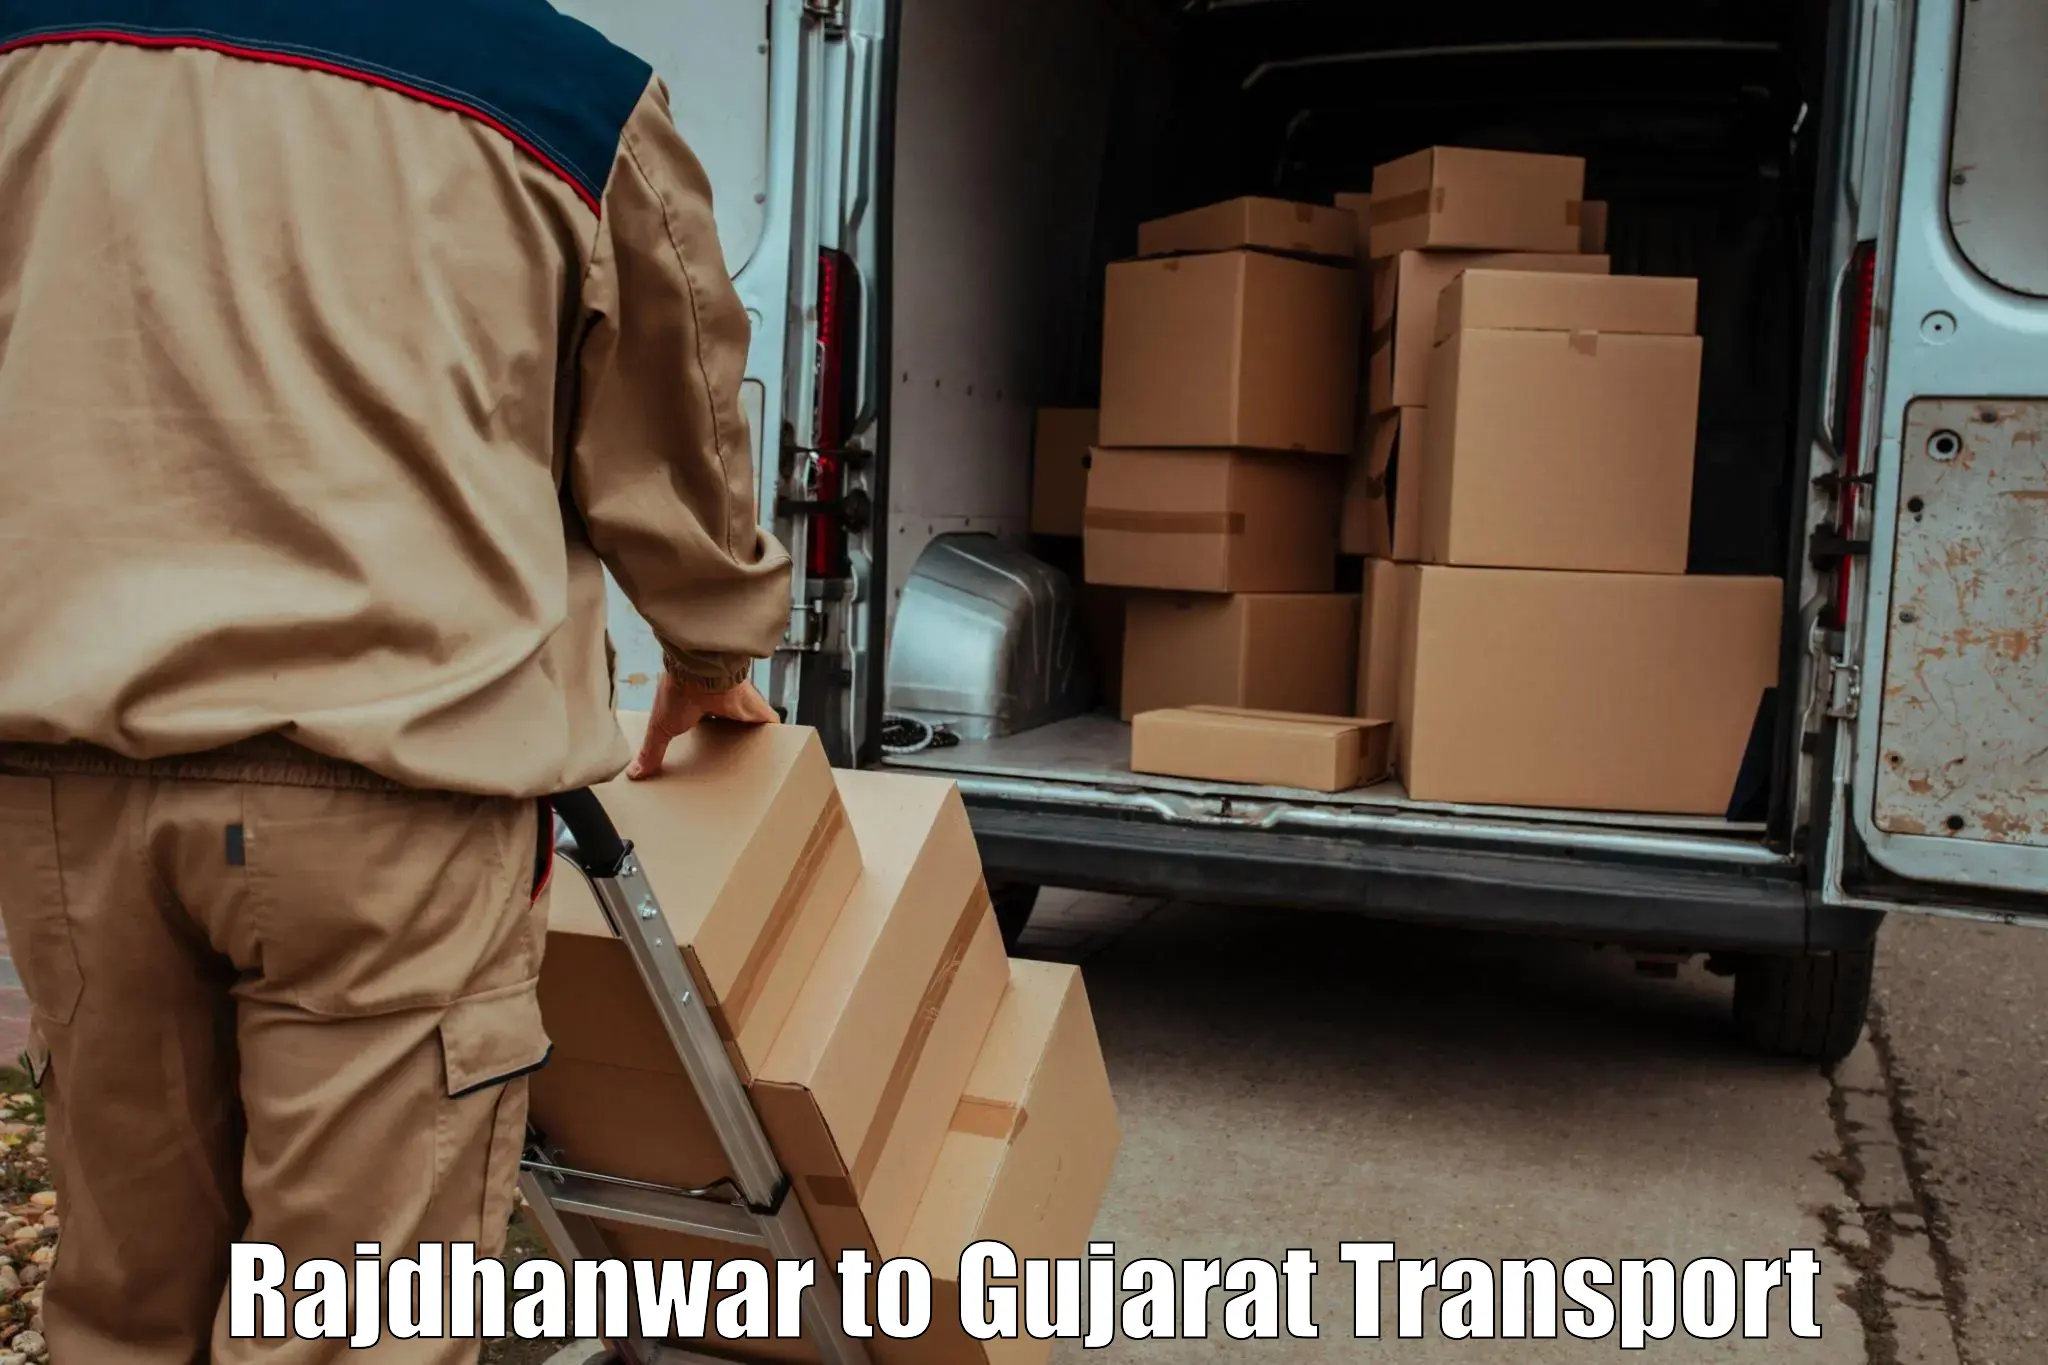 Shipping services Rajdhanwar to Rajkot